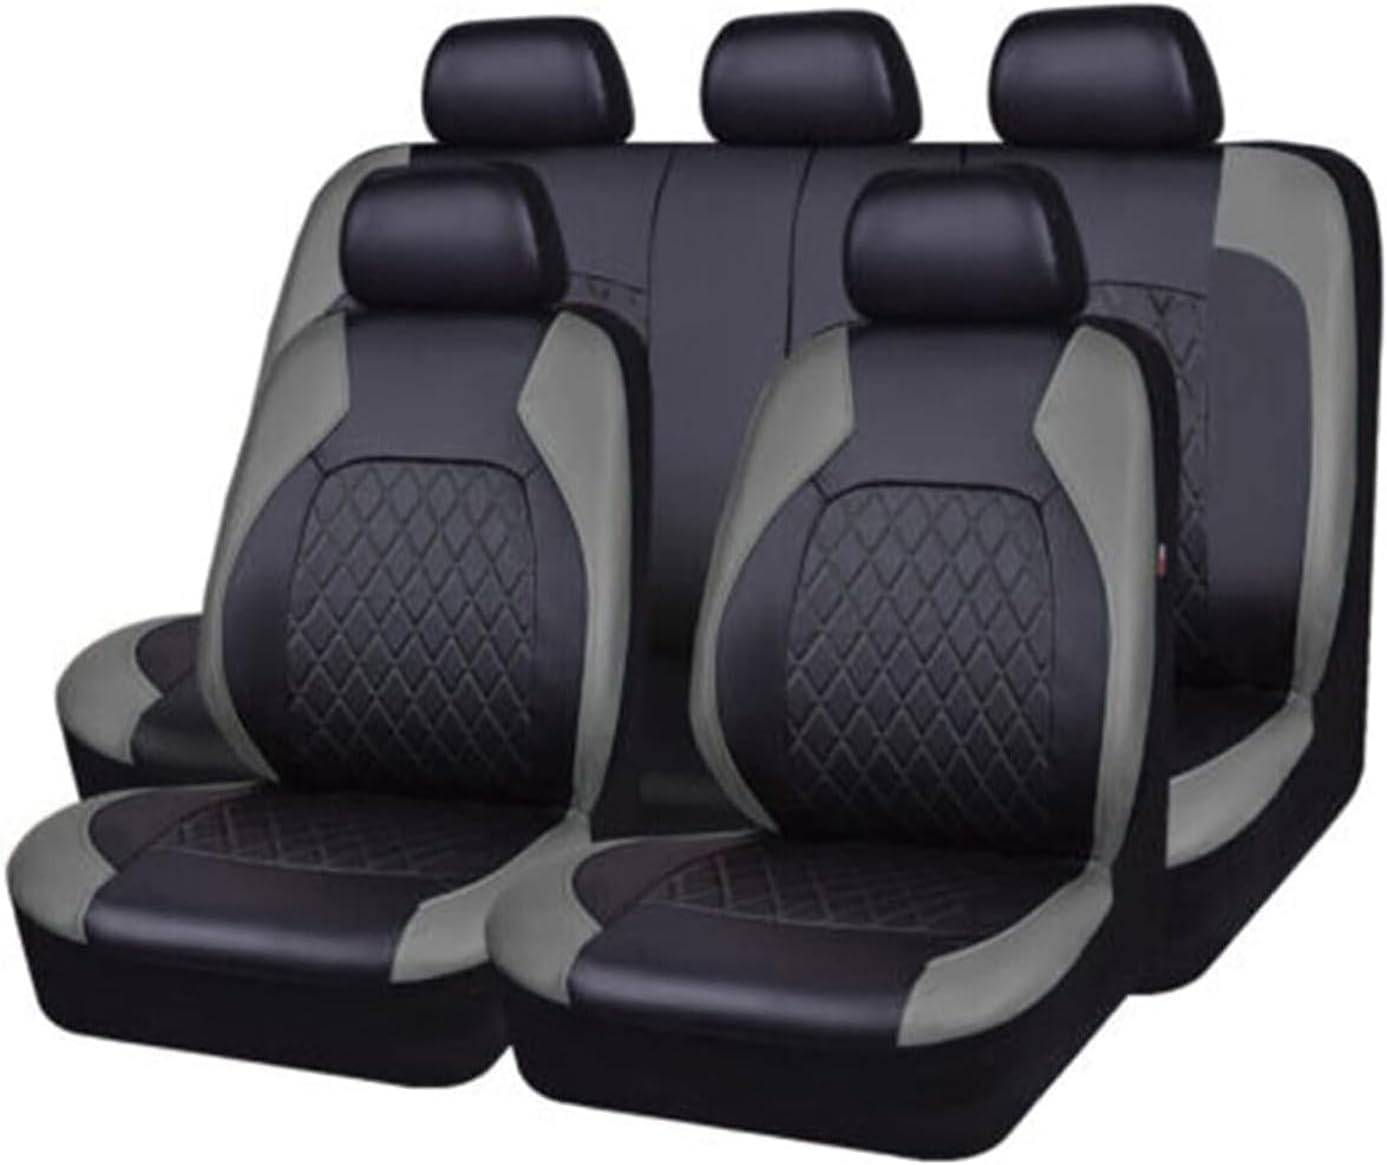 Auto Leder Sitzbezüge für Audi A1 A3 A4 A5 A6 A7 A8 A4L A6L A8L Q2 Q3 Q5 Q7 Q5L, 9 Stück Allwetter rutschfest Wasserdicht Atmungsaktiv Schonbezug Set Sitzkissenschutz,B/Grey von SARCX